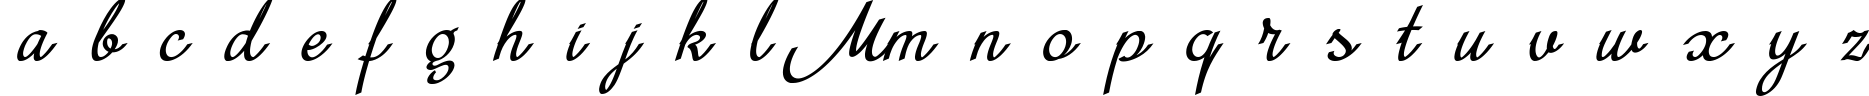 Пример написания английского алфавита шрифтом MiniDemo